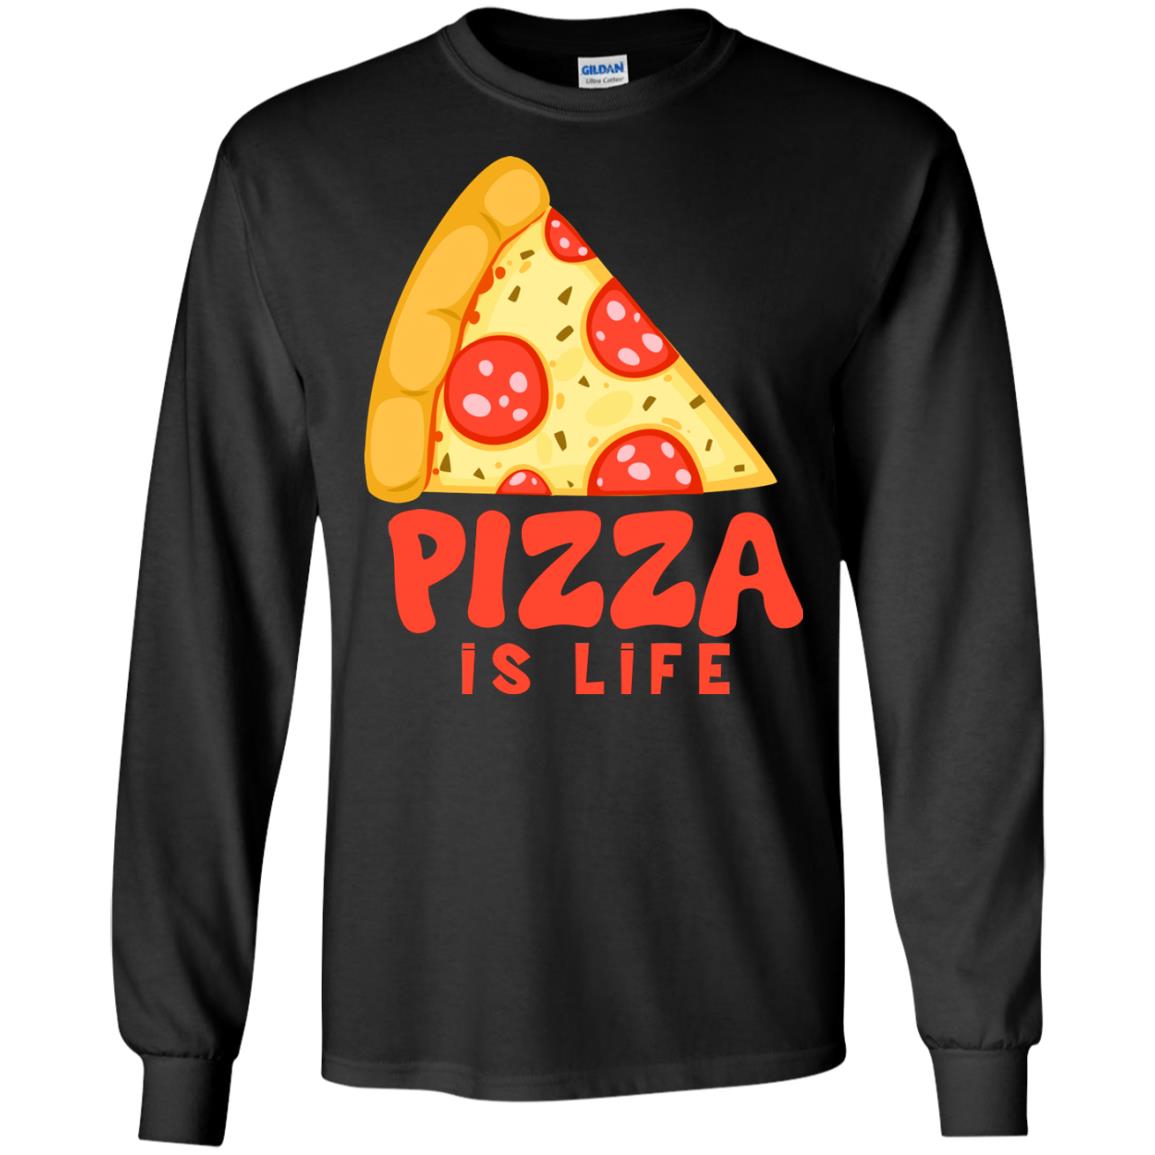 Pizza Is Life Shirt For Pizza LoversG240 Gildan LS Ultra Cotton T-Shirt